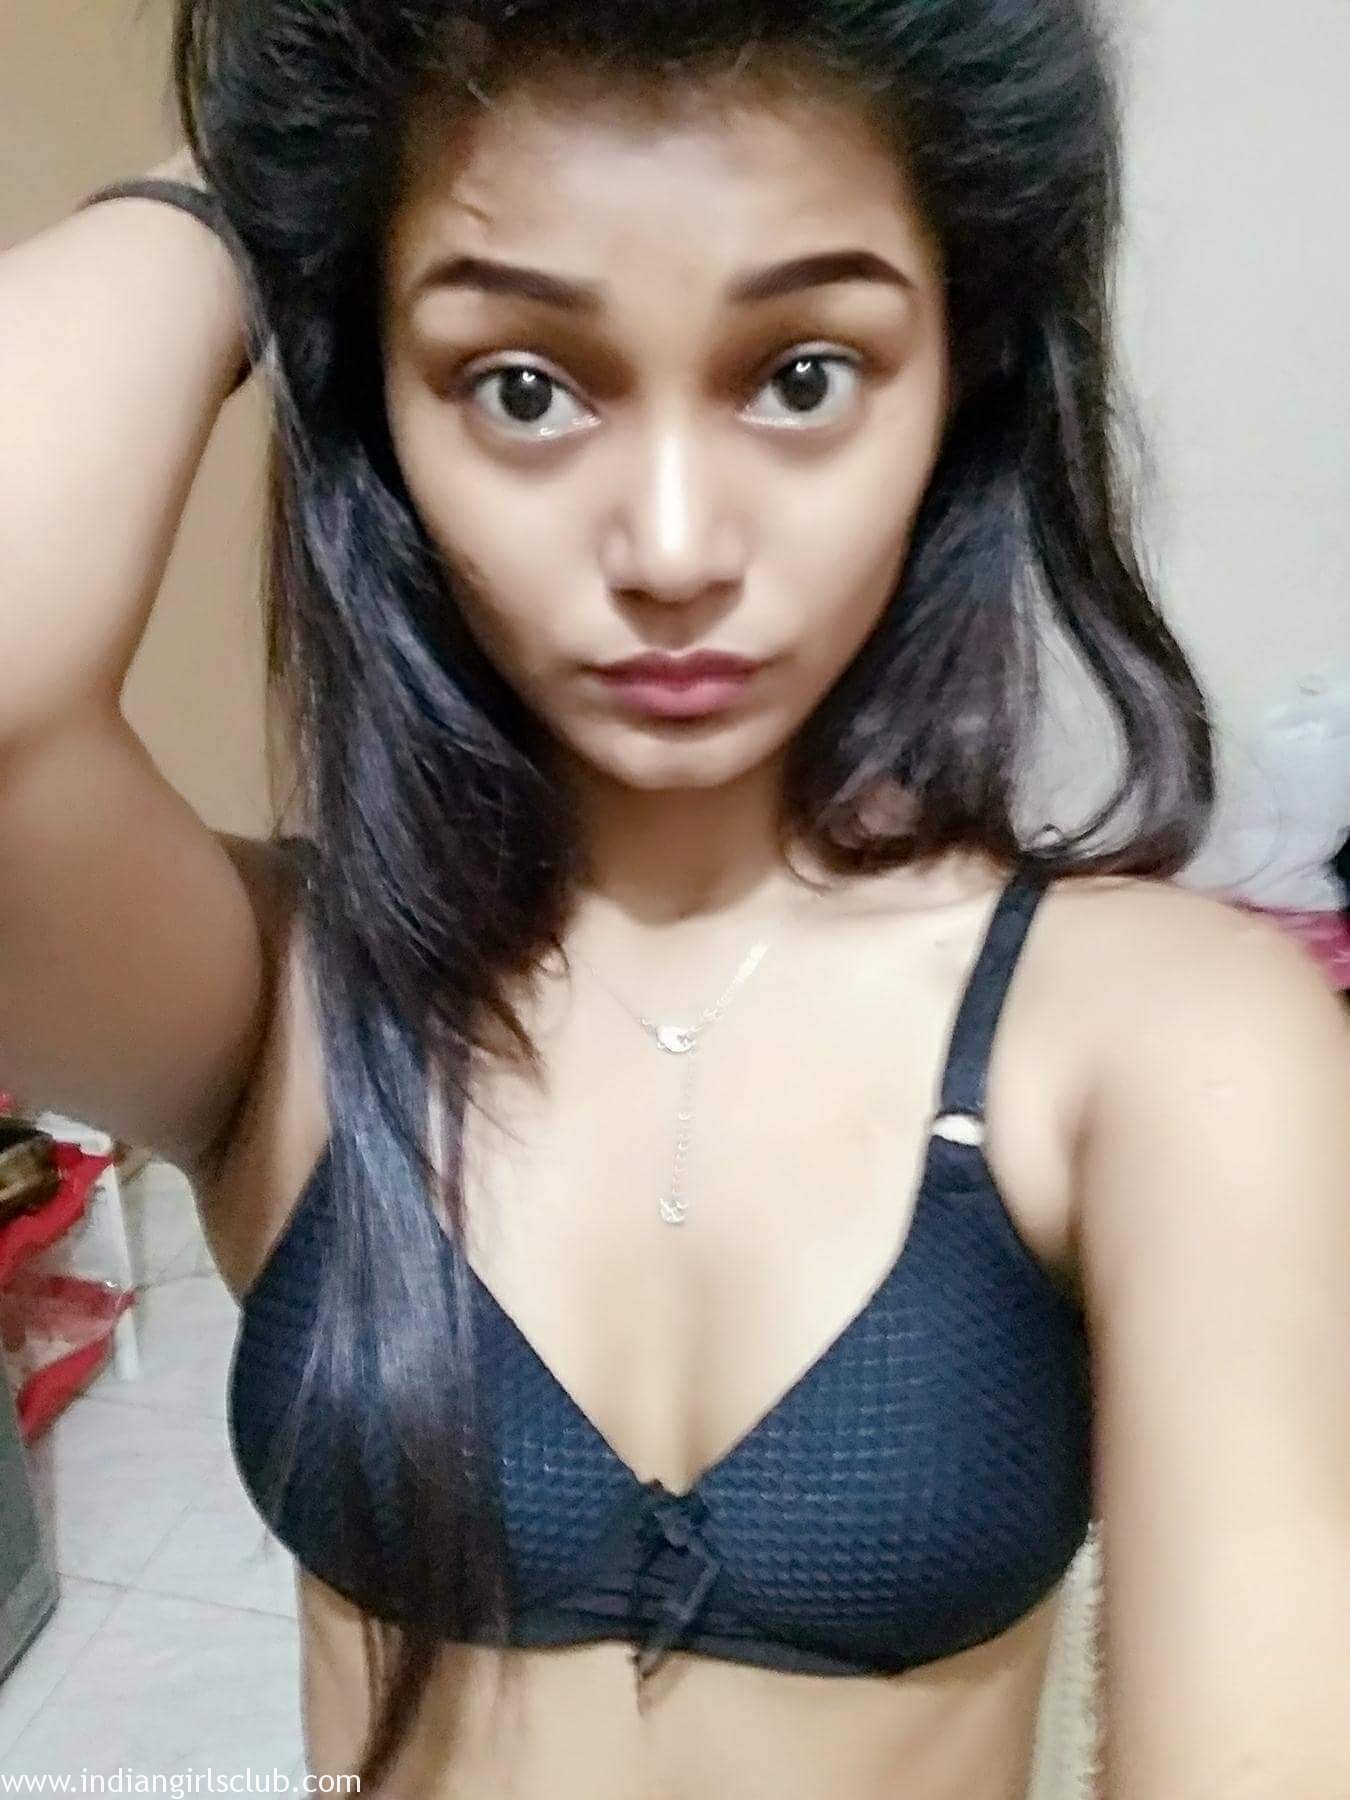 juicy_indian_teen_homemade_porn_19 - Indian Girls Club